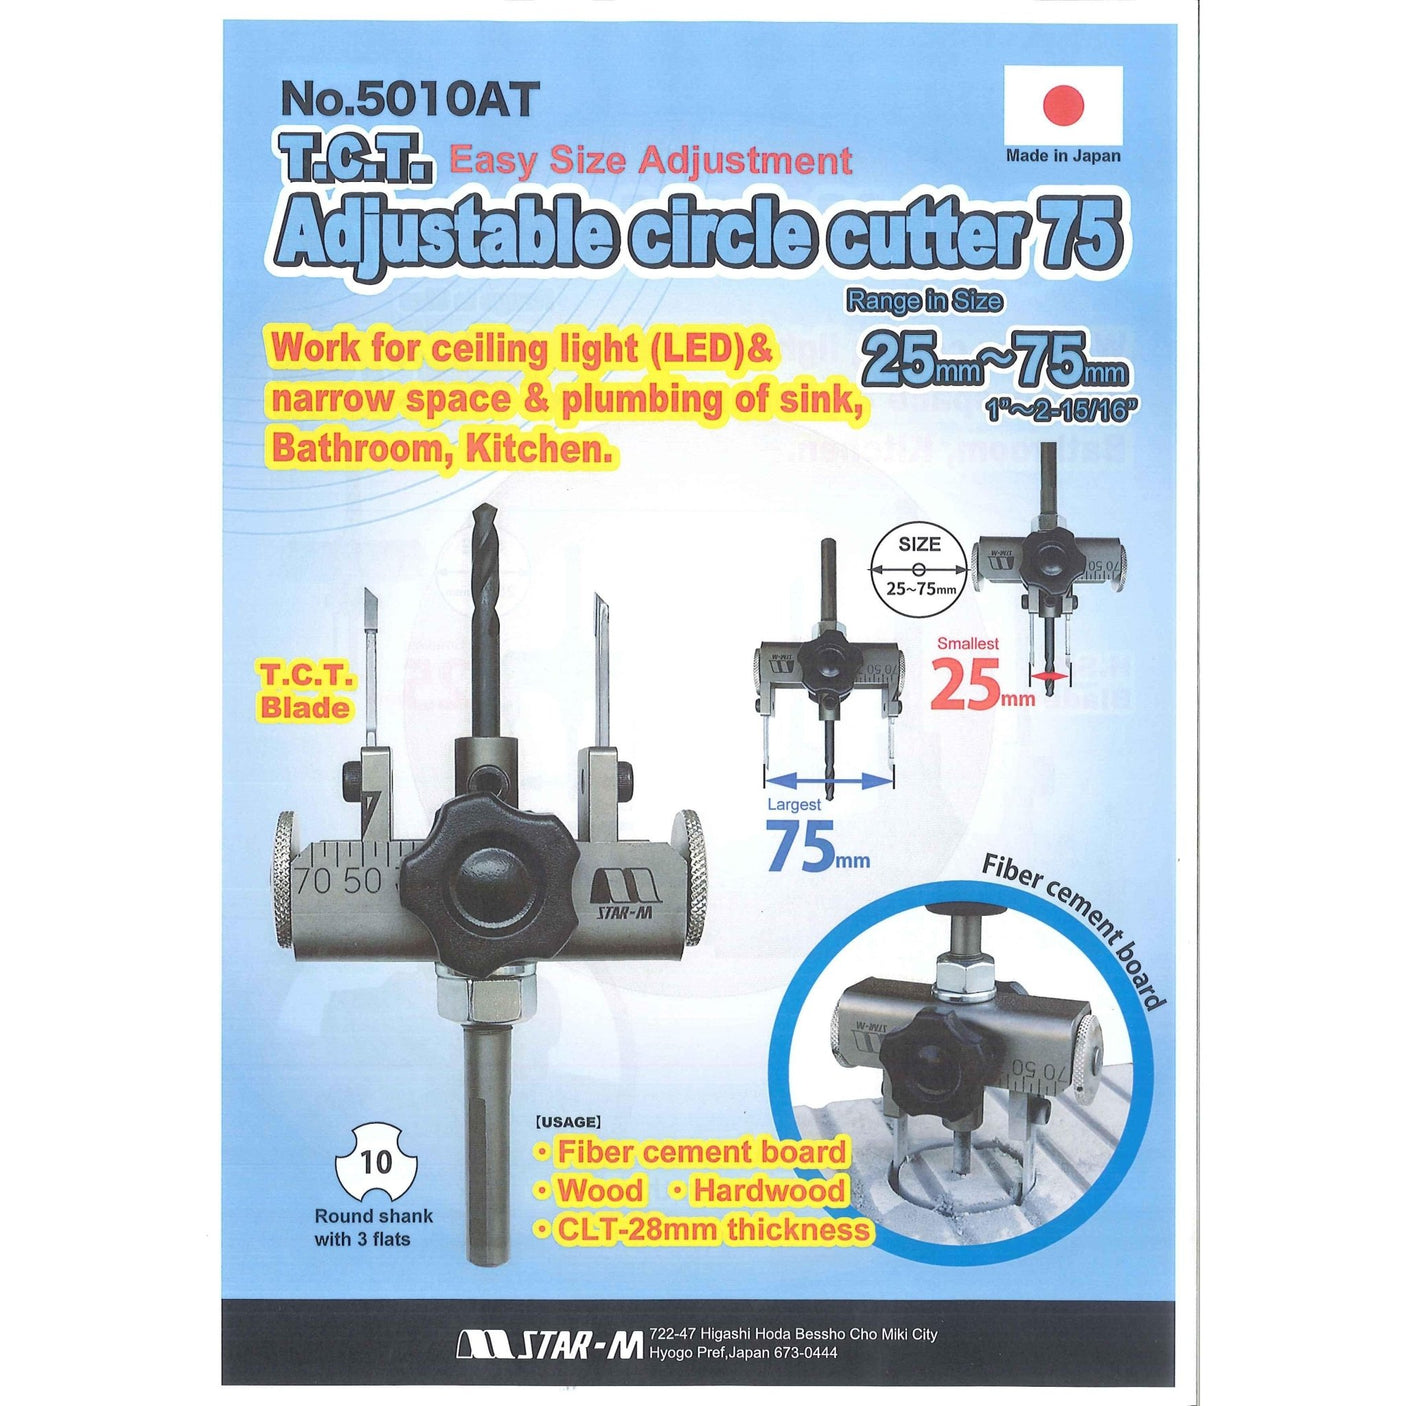 Star-M TCT Adjustable circle cutter 25-75mm - Drill Bits - Japanese Tools Australia